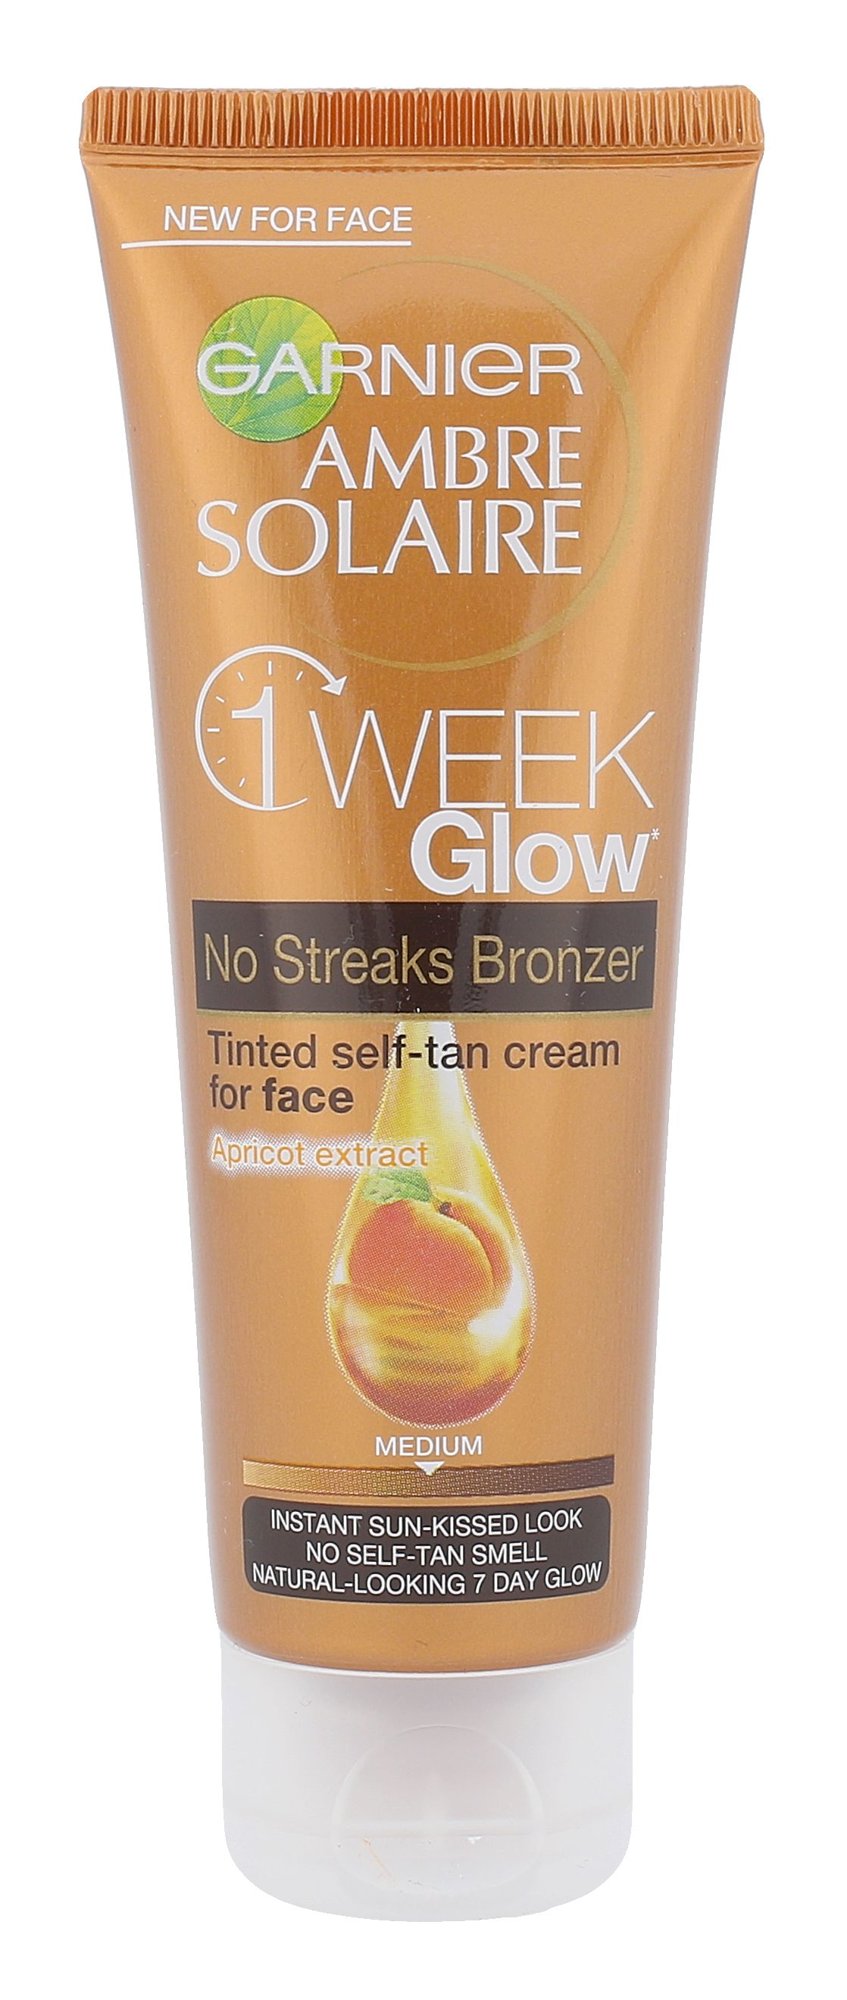 Garnier Ambre Solaire One Week Glow Self-Tan Face Cream